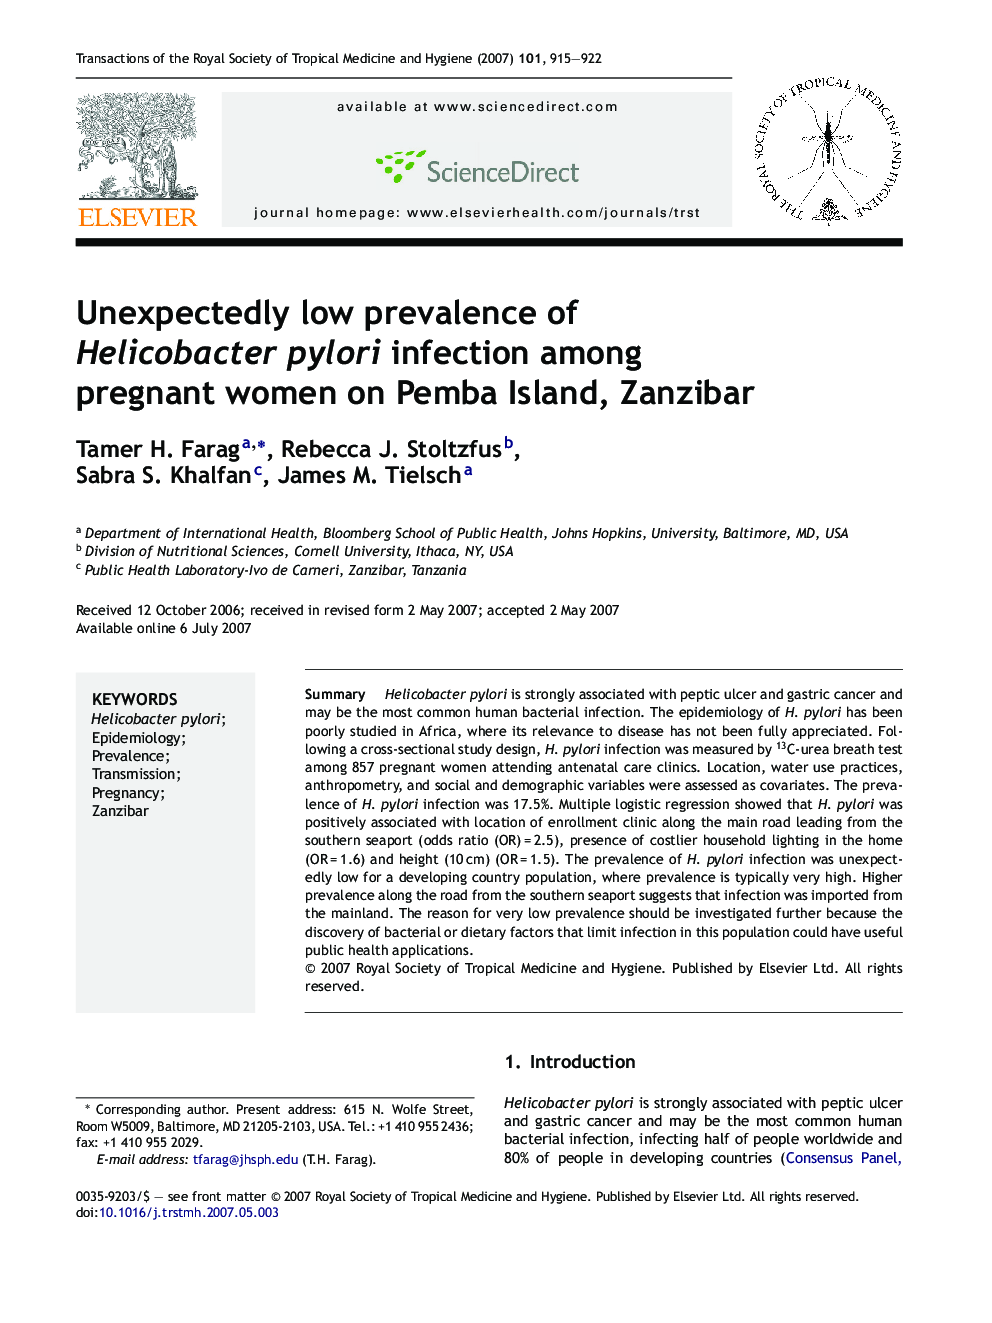 Unexpectedly low prevalence of Helicobacter pylori infection among pregnant women on Pemba Island, Zanzibar